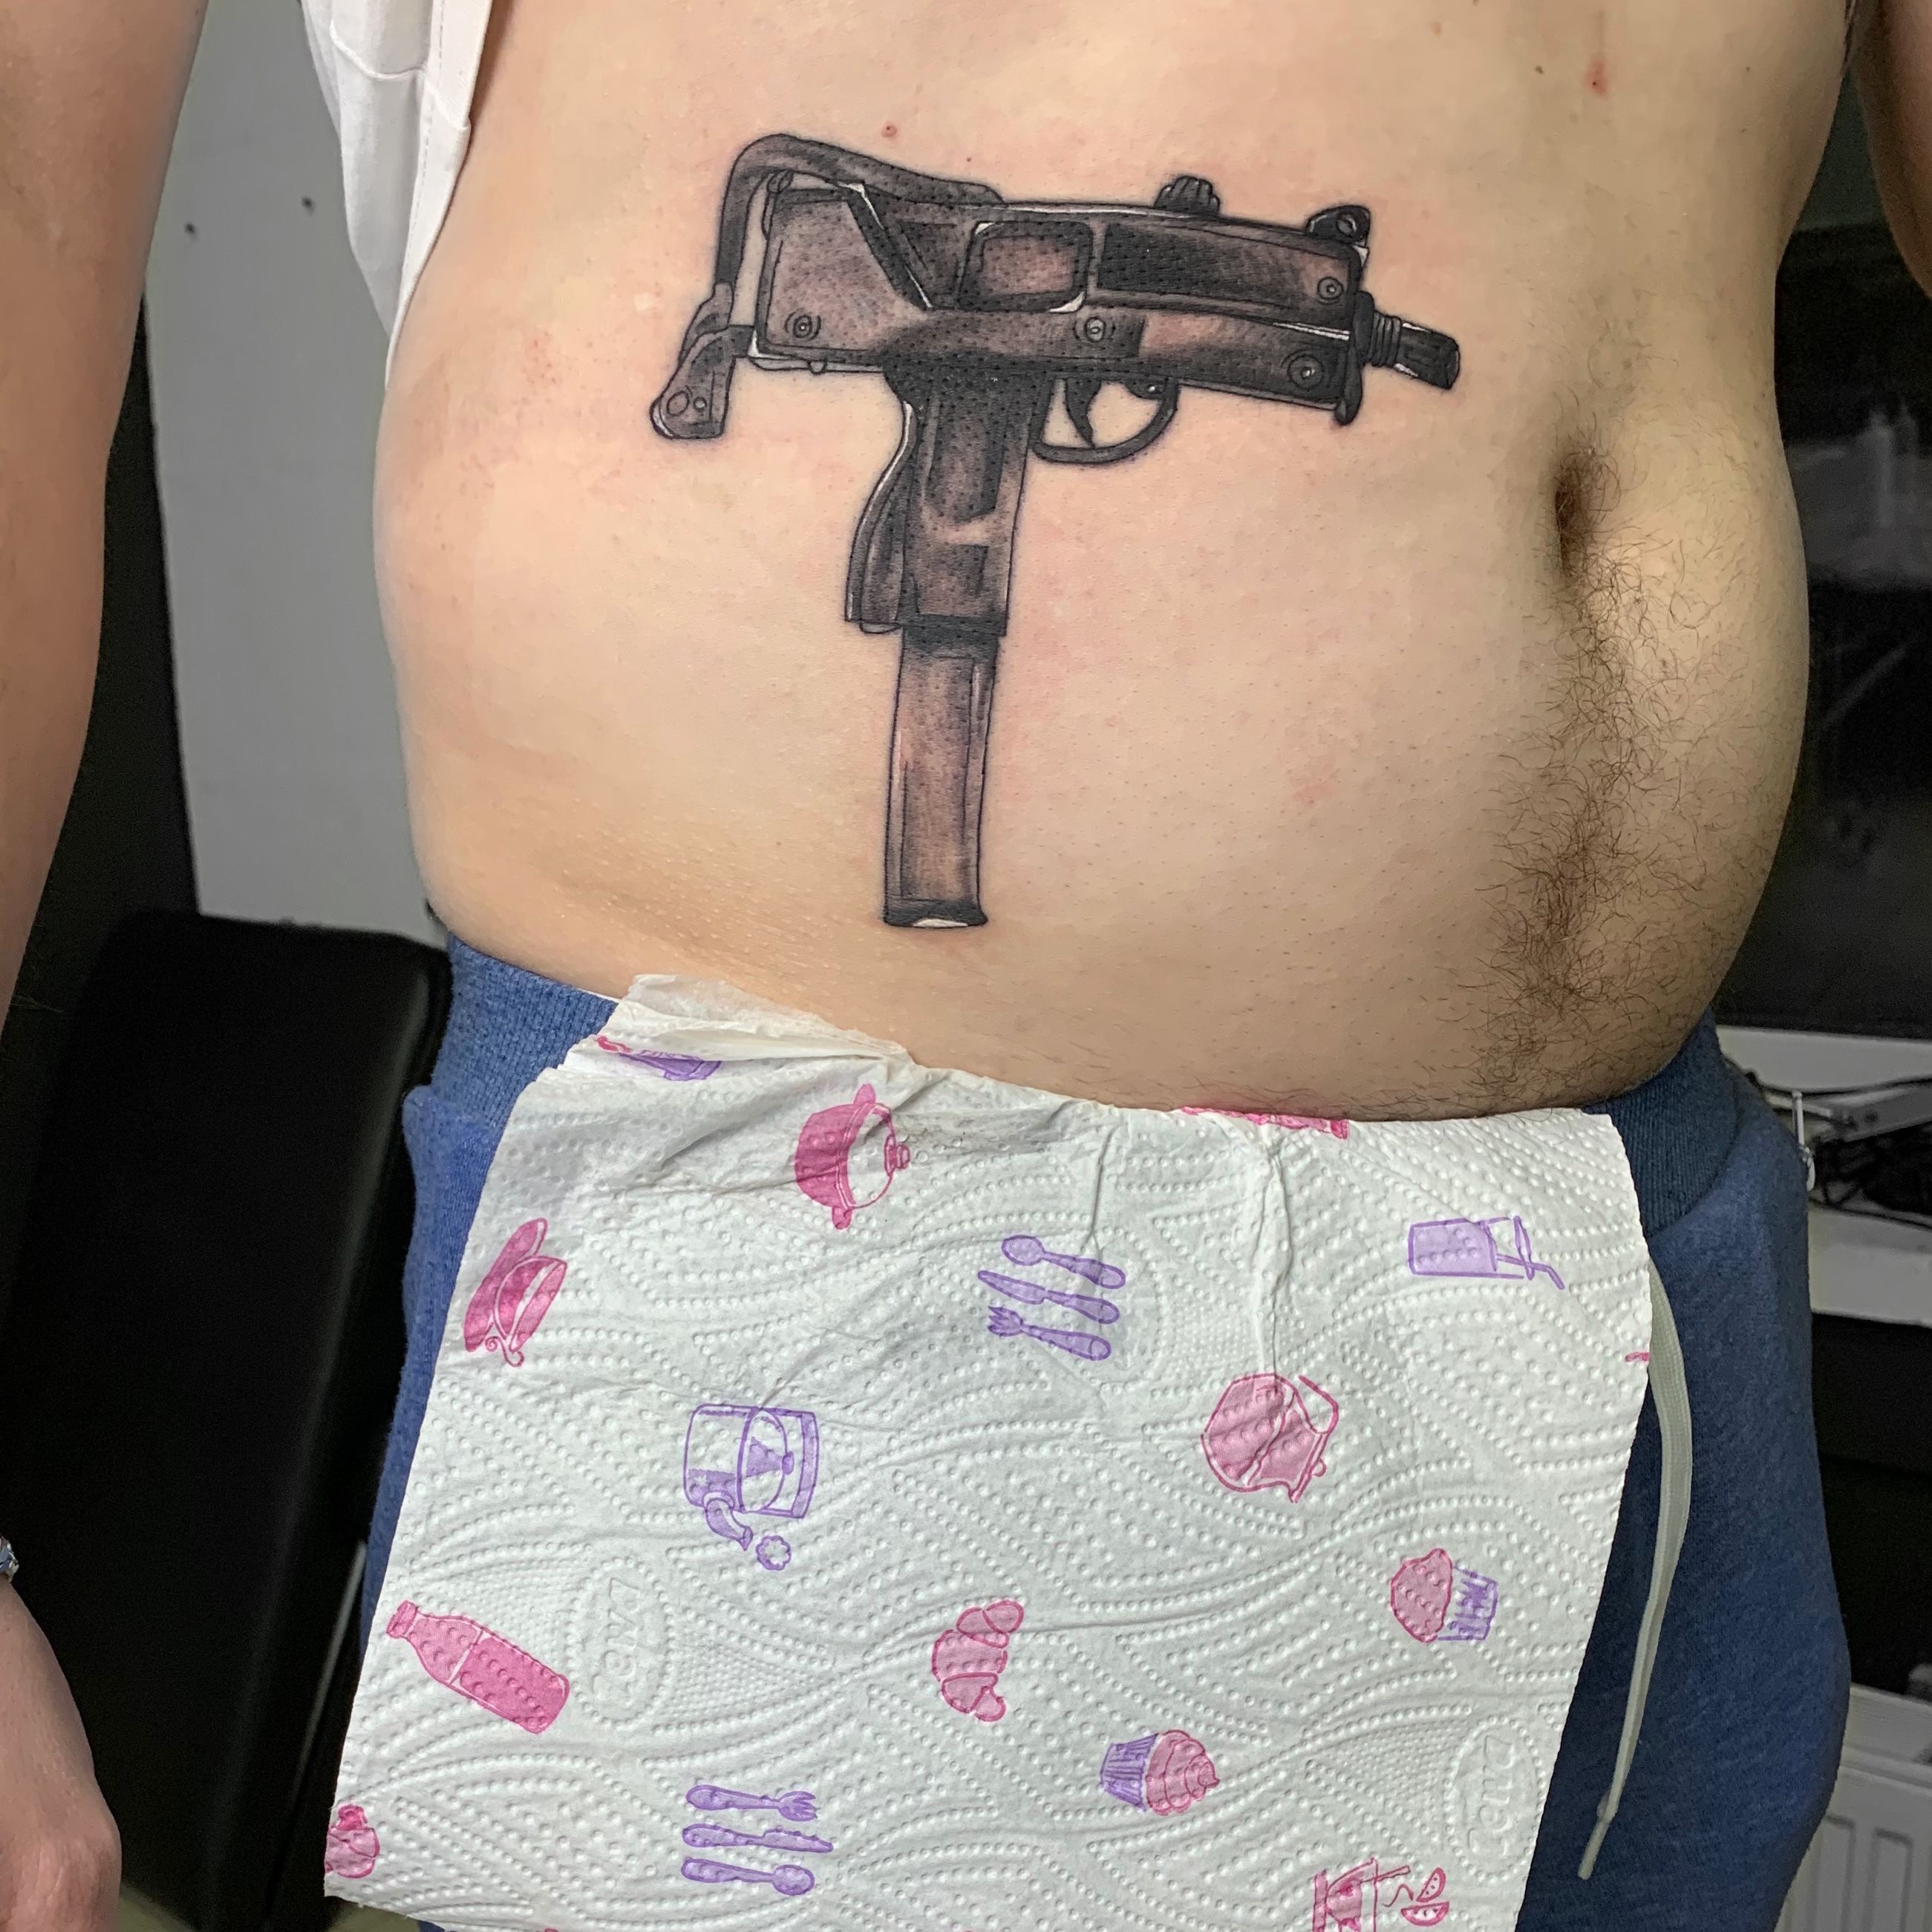 50 Uzi Tattoo Ideas For Men  Firearm Designs